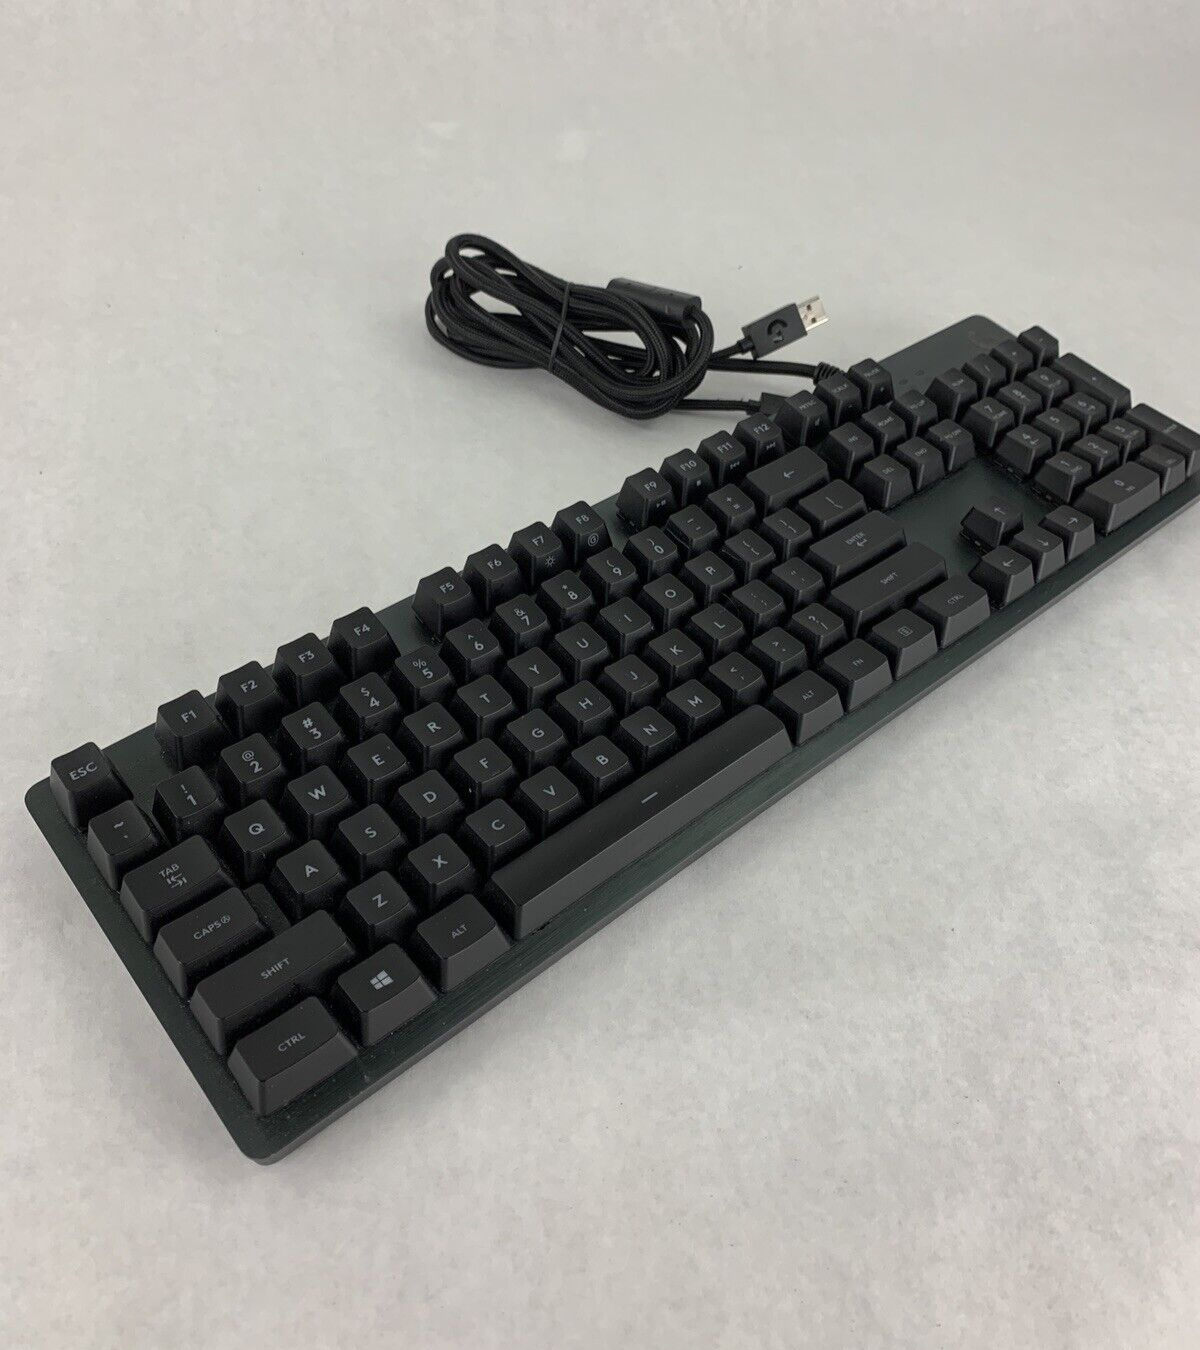 Logitech G413 Carbon Mechanical Gaming Keyboard USB Y-U0032 Tested No Backclip